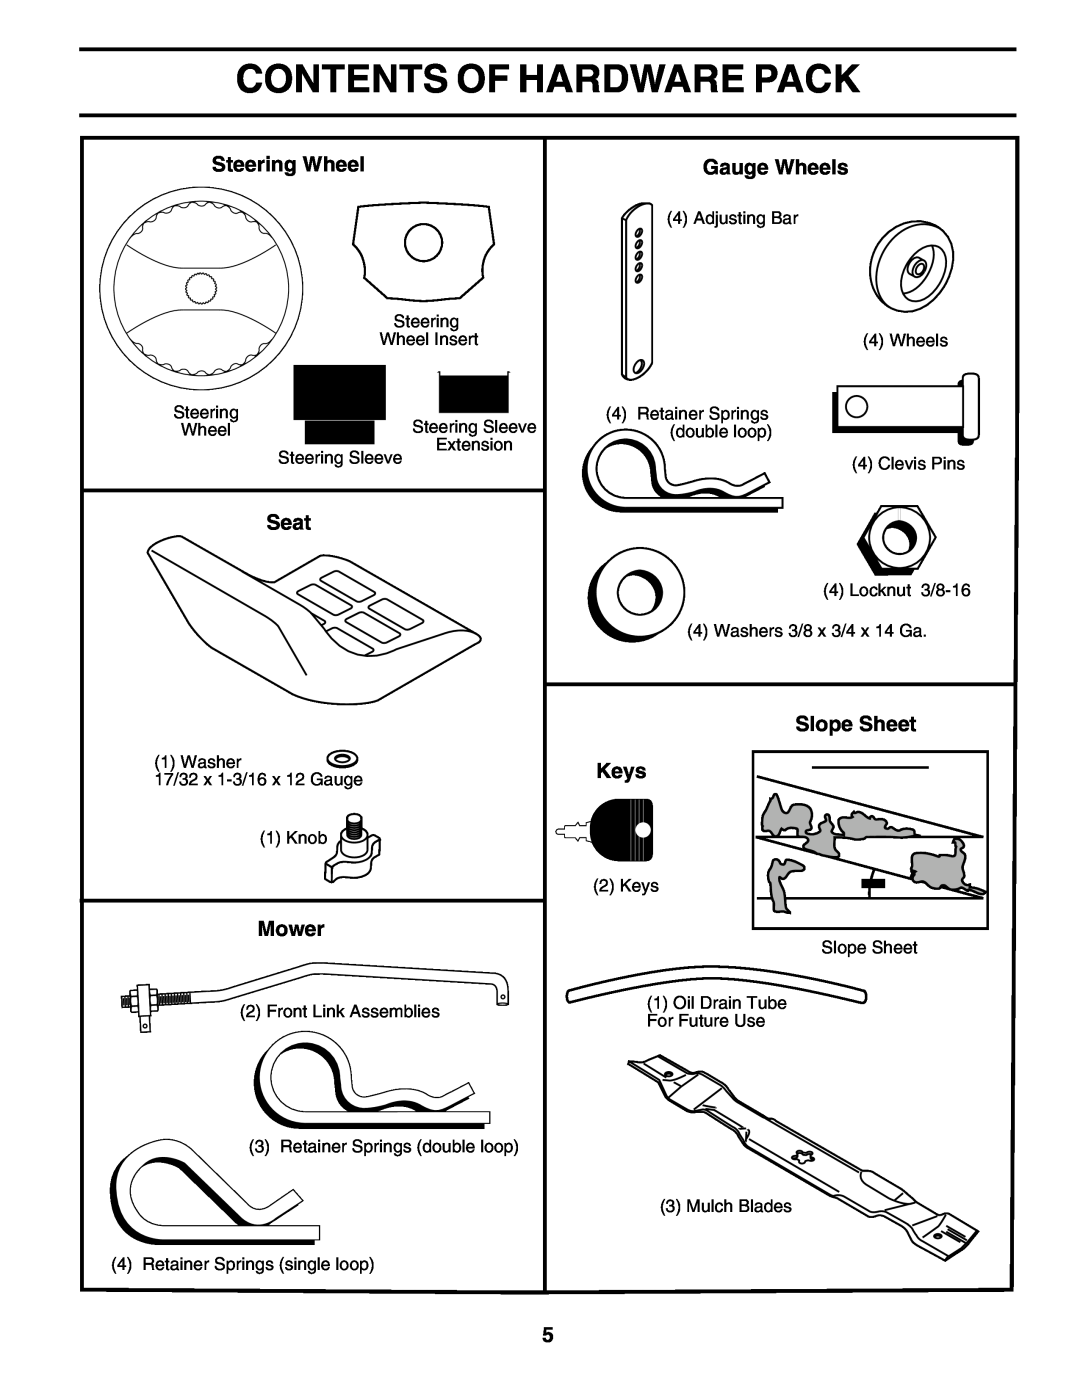 Poulan 177271 owner manual Contents Of Hardware Pack, Steering Wheel, Gauge Wheels, Seat, Slope Sheet, Keys, Mower 